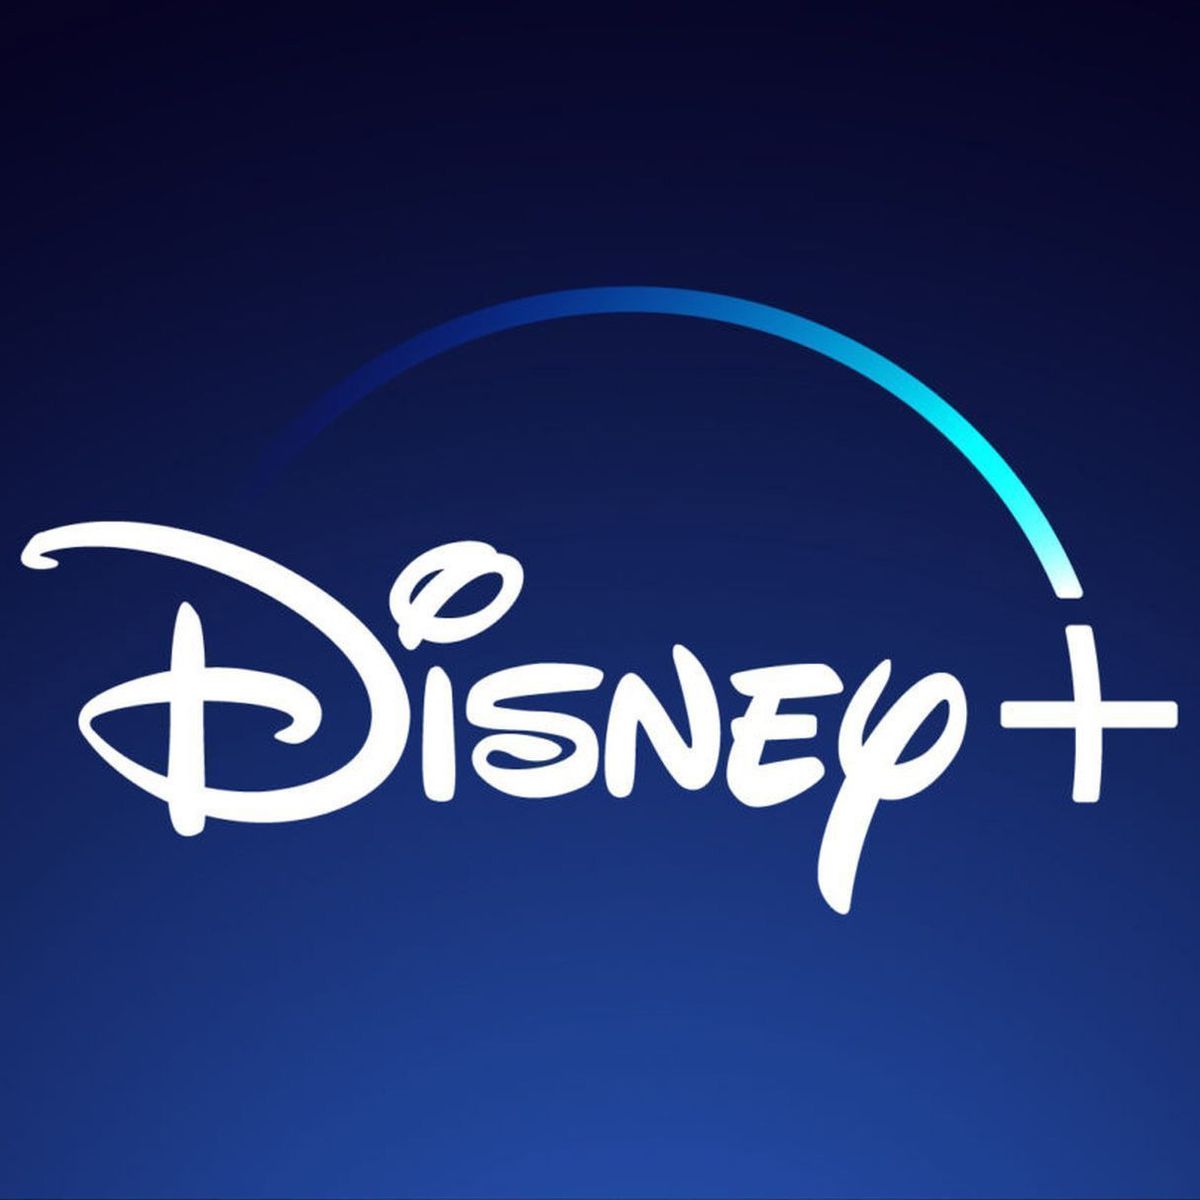 Disney Plus’ The Princess is apparently John Wick meets Sleeping Beauty